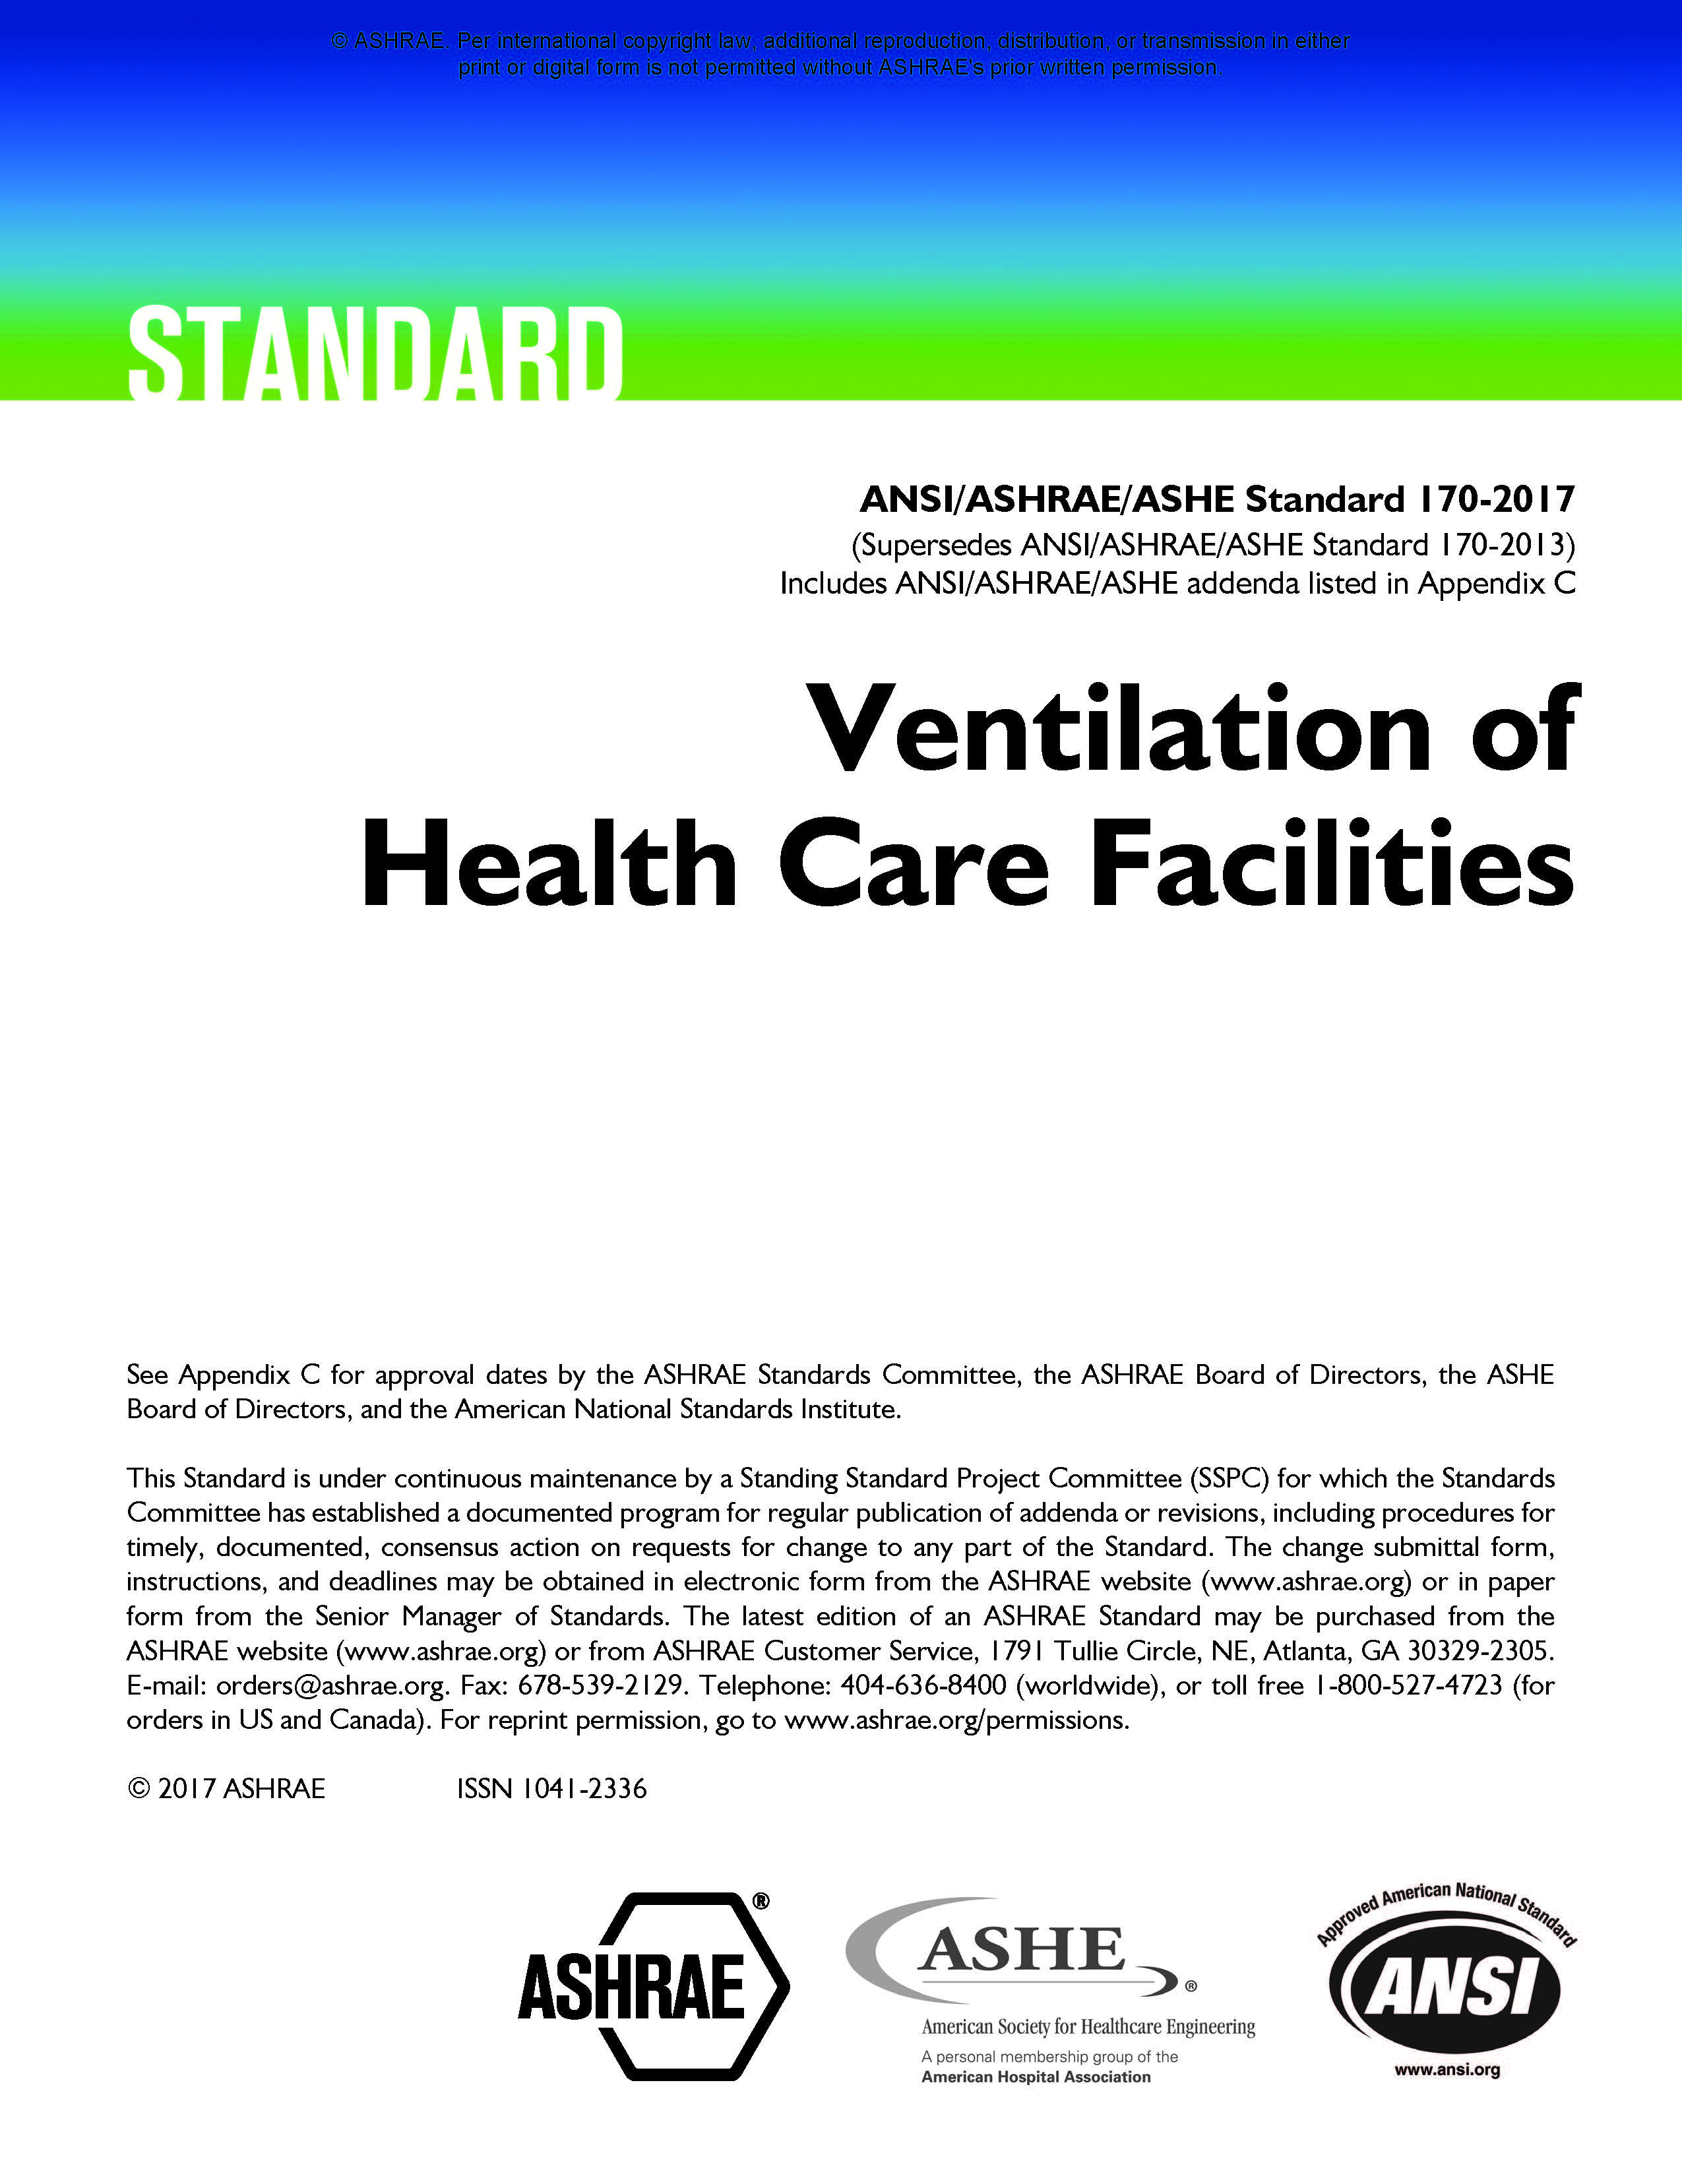 ANSI/ASHRAE/ASHE Standard 170-2017, Ventilation of Health Care Facilities: Digital Edition